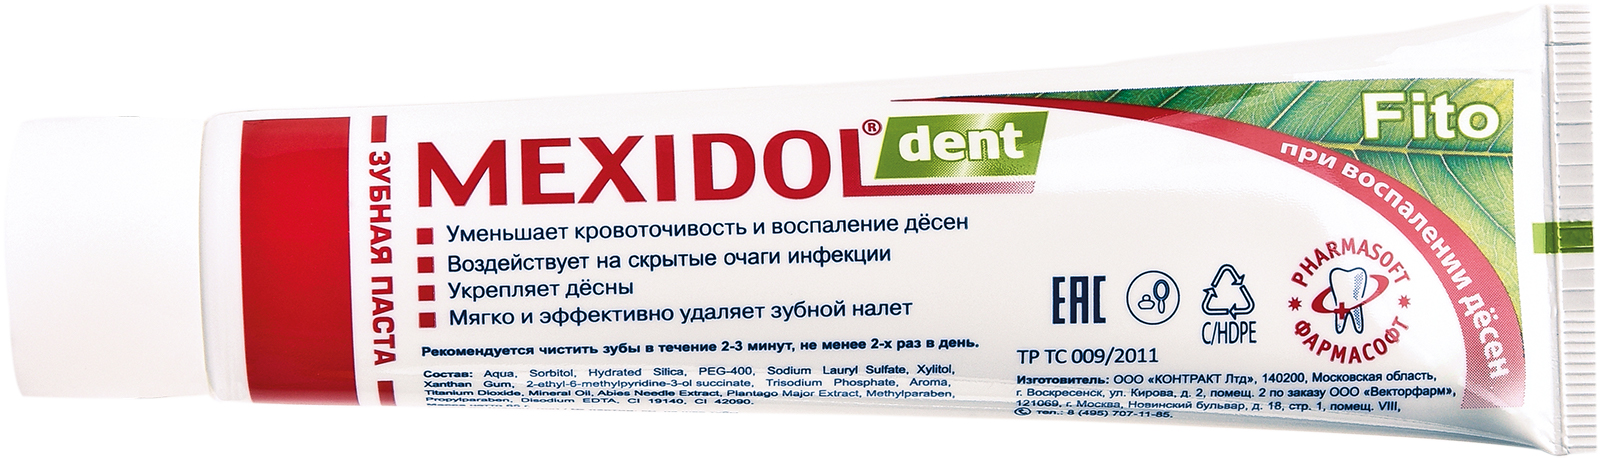 Мексидол Дент Фито, зубная паста, 100 г зубная паста mexidol dent activ 65 г